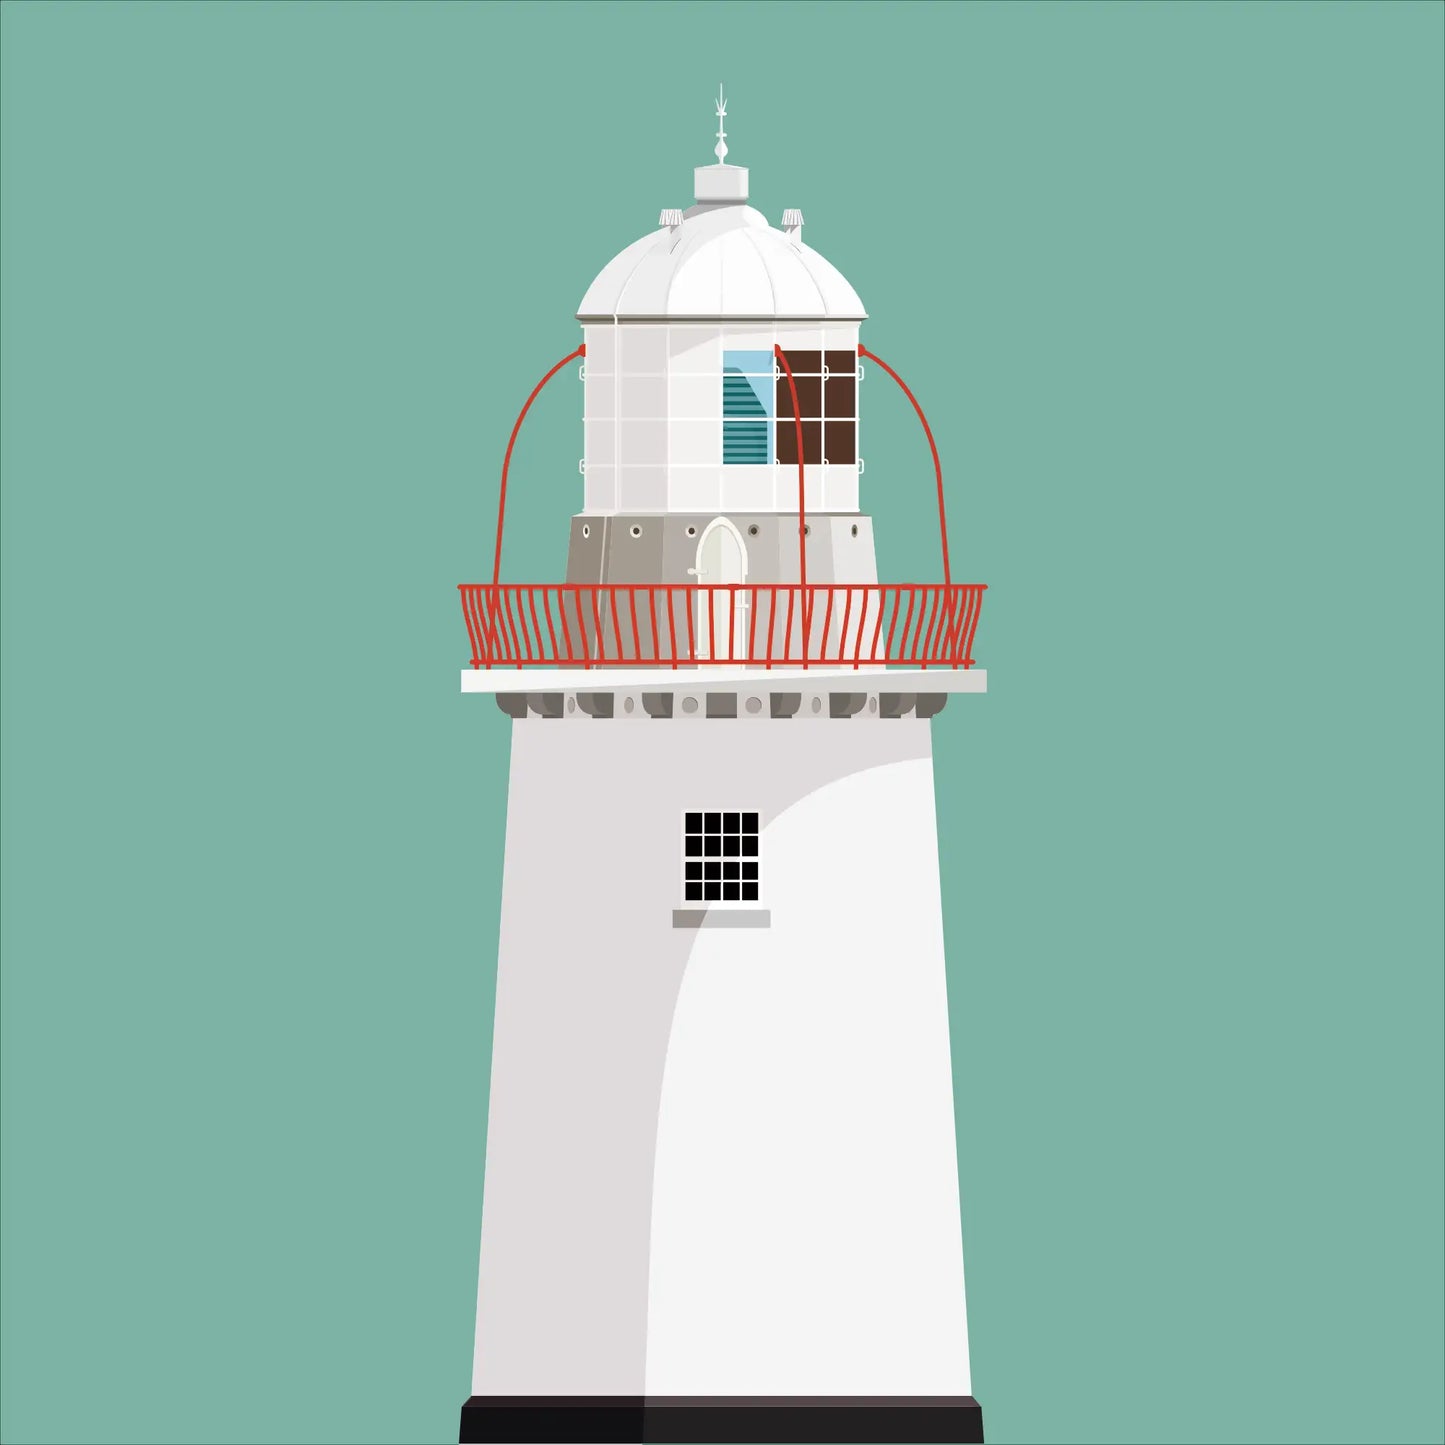 Illustration of Crookhaven lighthouse on a white background inside light blue square.